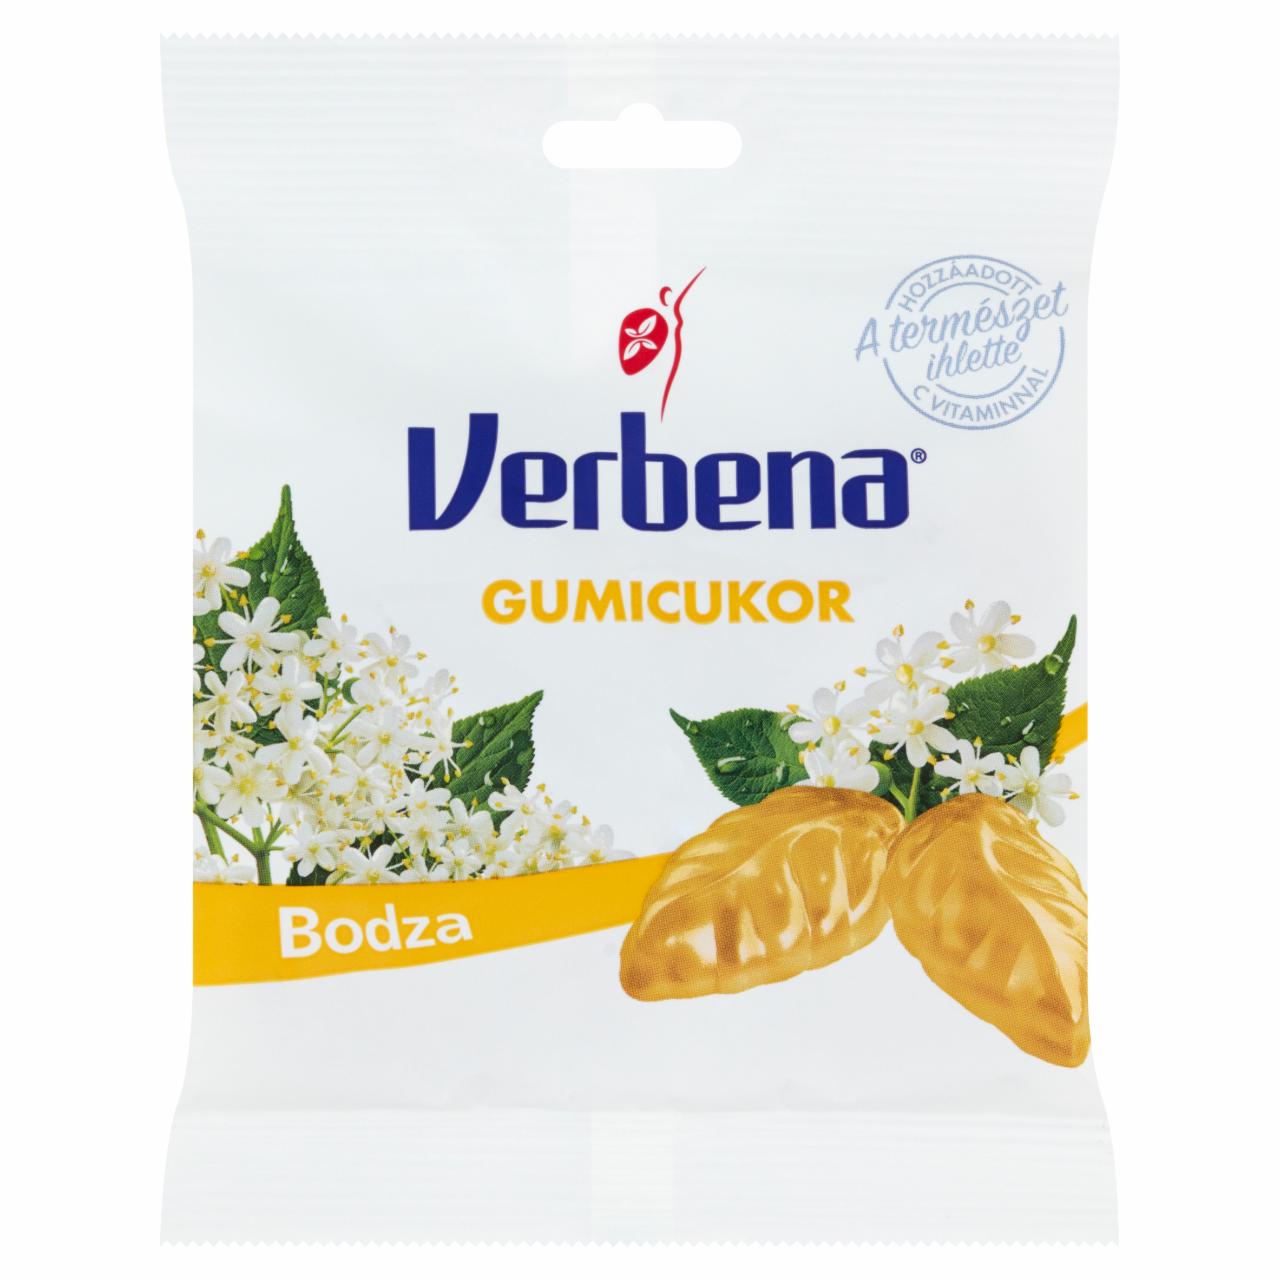 Képek - Verbena bodzás gumicukor C vitaminnal 60 g